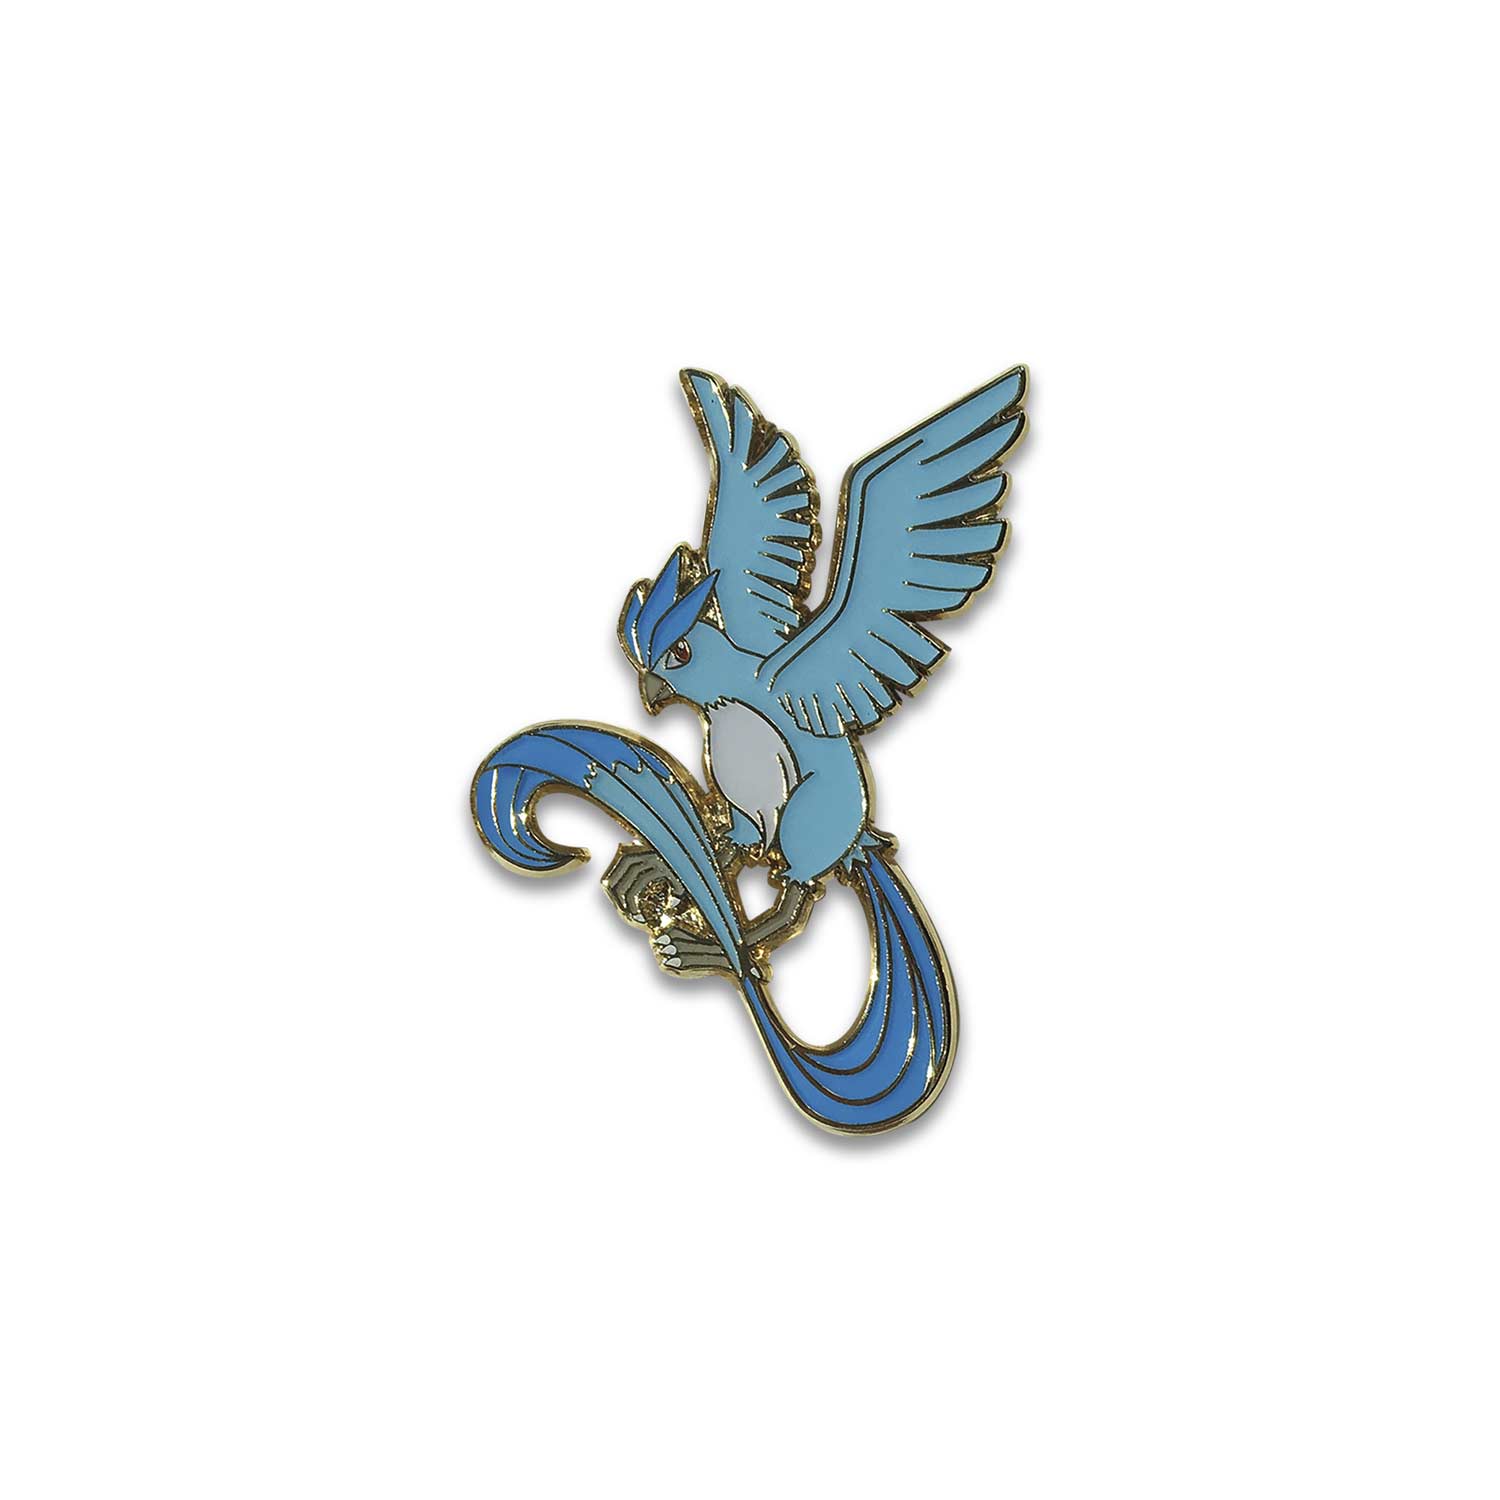 [Pokemon] Frozen - Galar Articuno Team Mystic Legendary Bird Enamel Pin